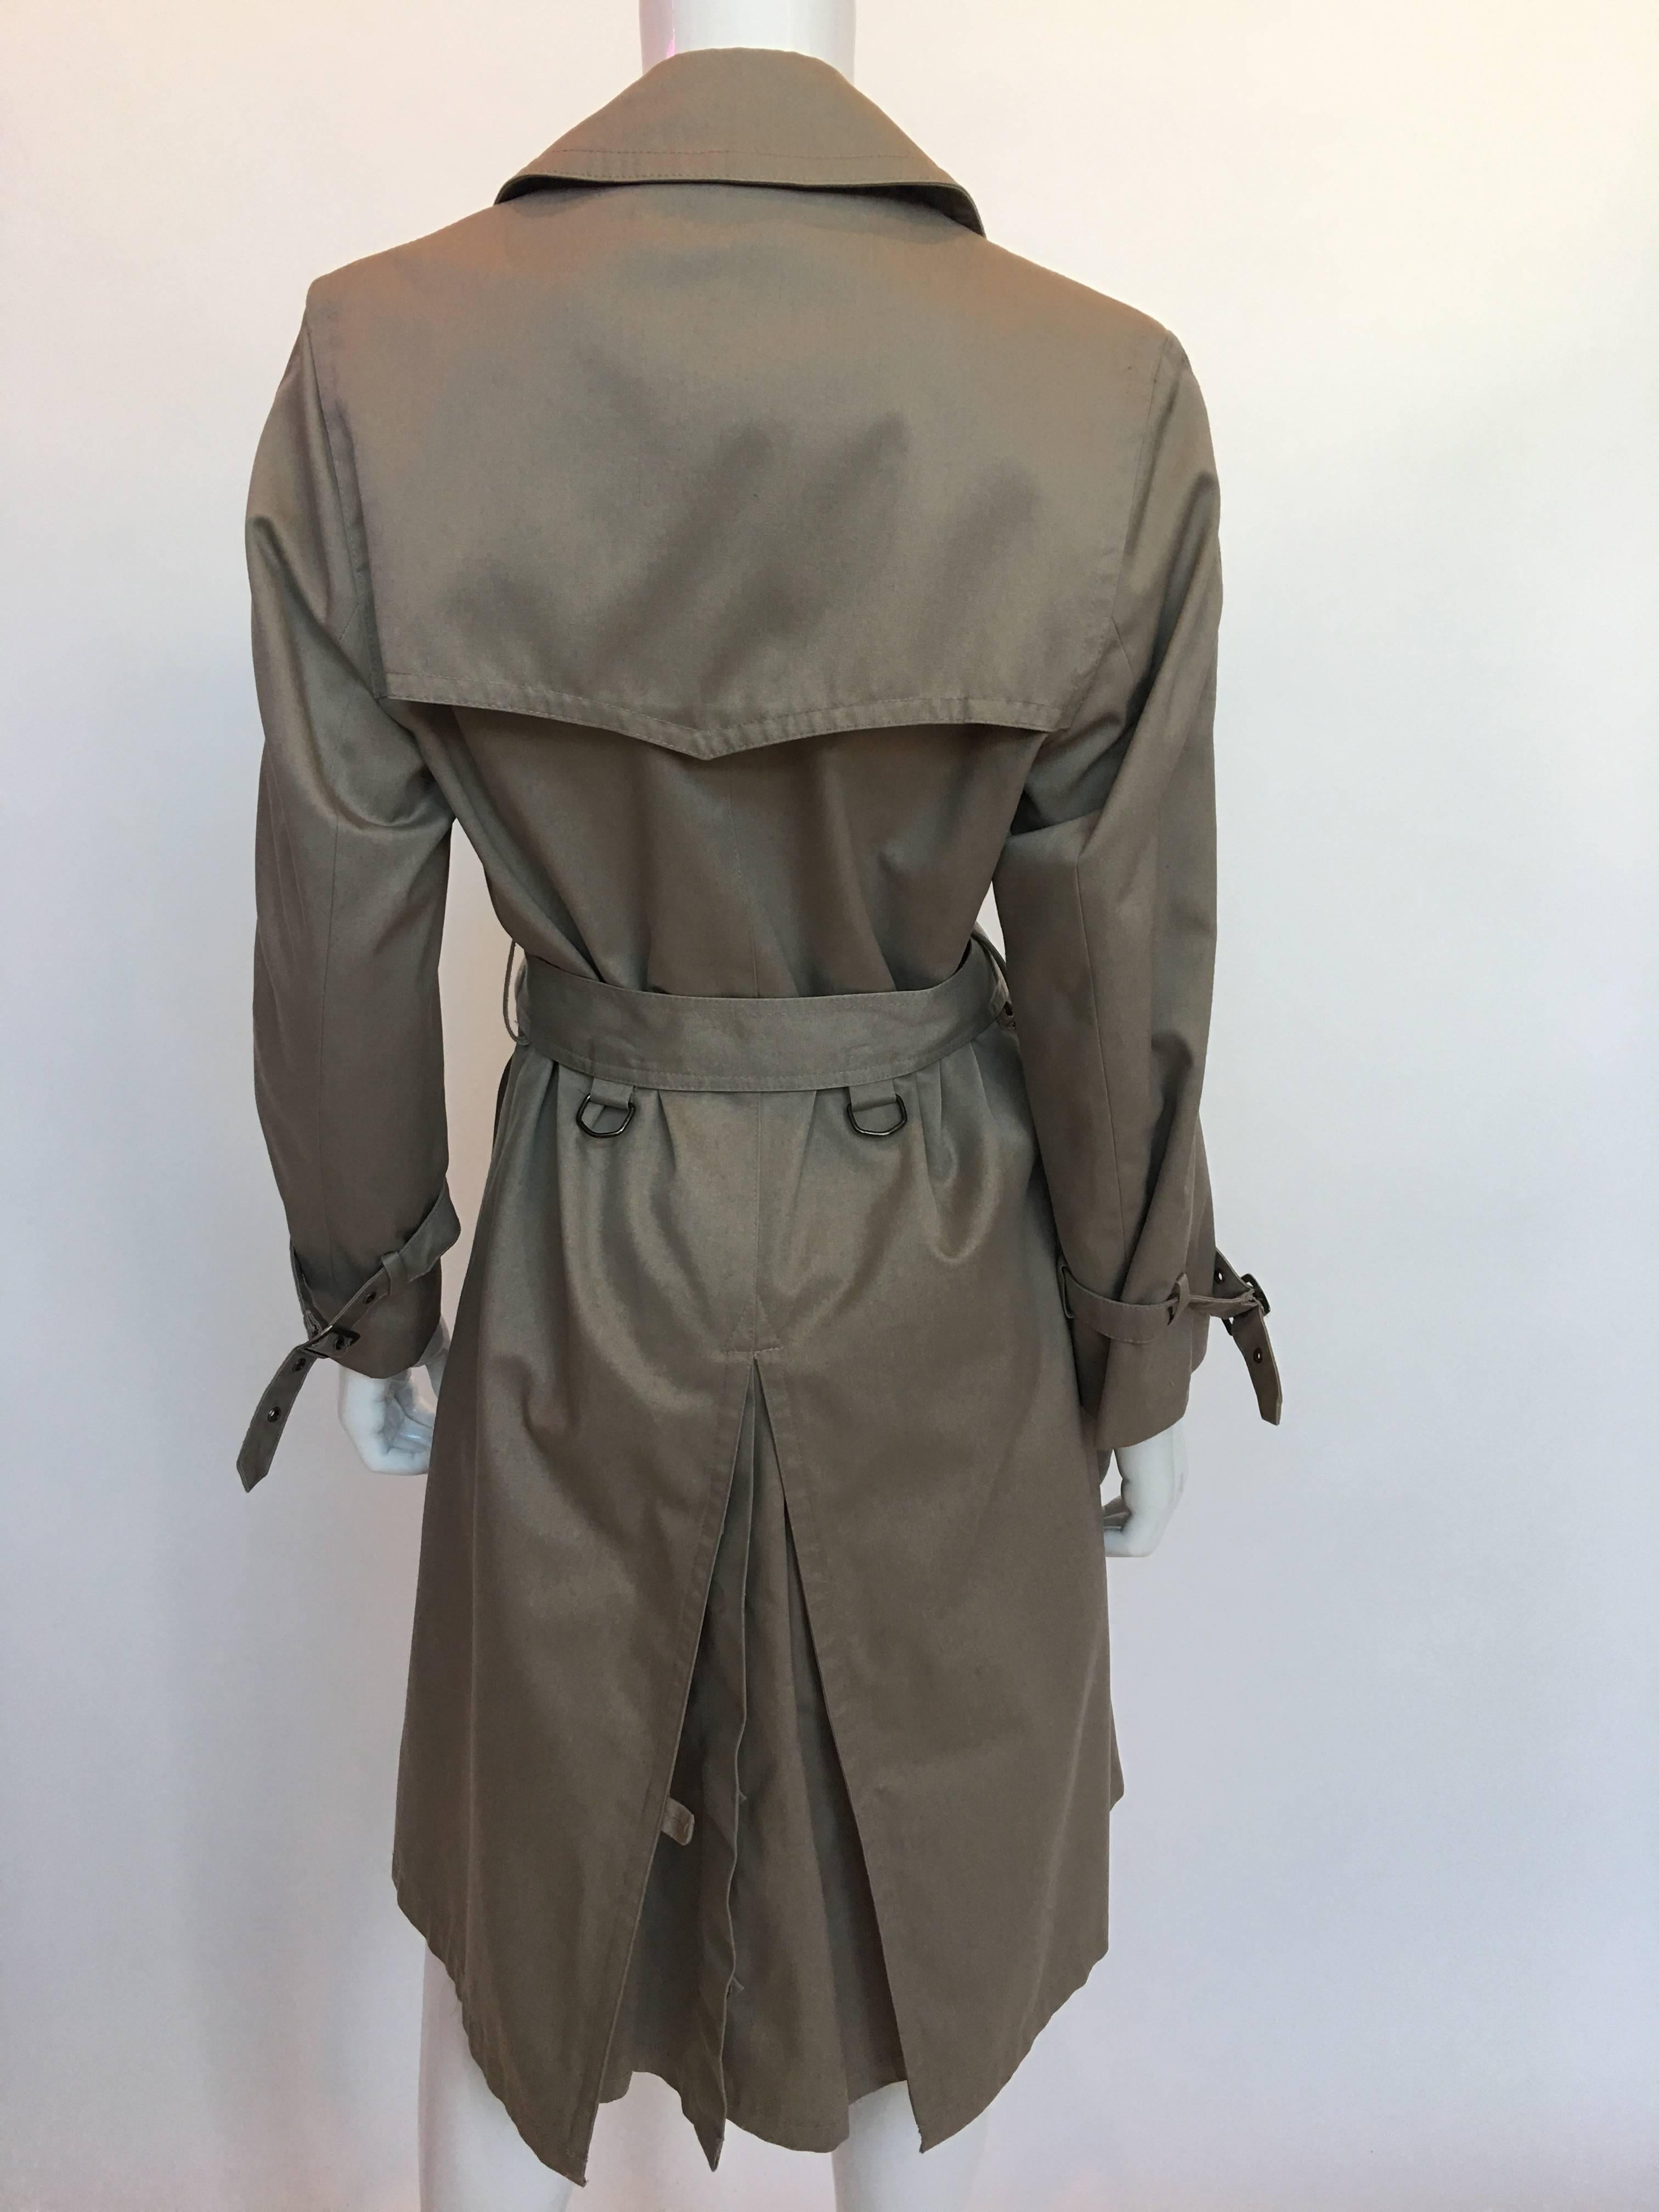 1970s Pierre Cardin Tan Trenchcoat

Made in France
Size label 38

All measurements taken flat:
Shoulders: 15